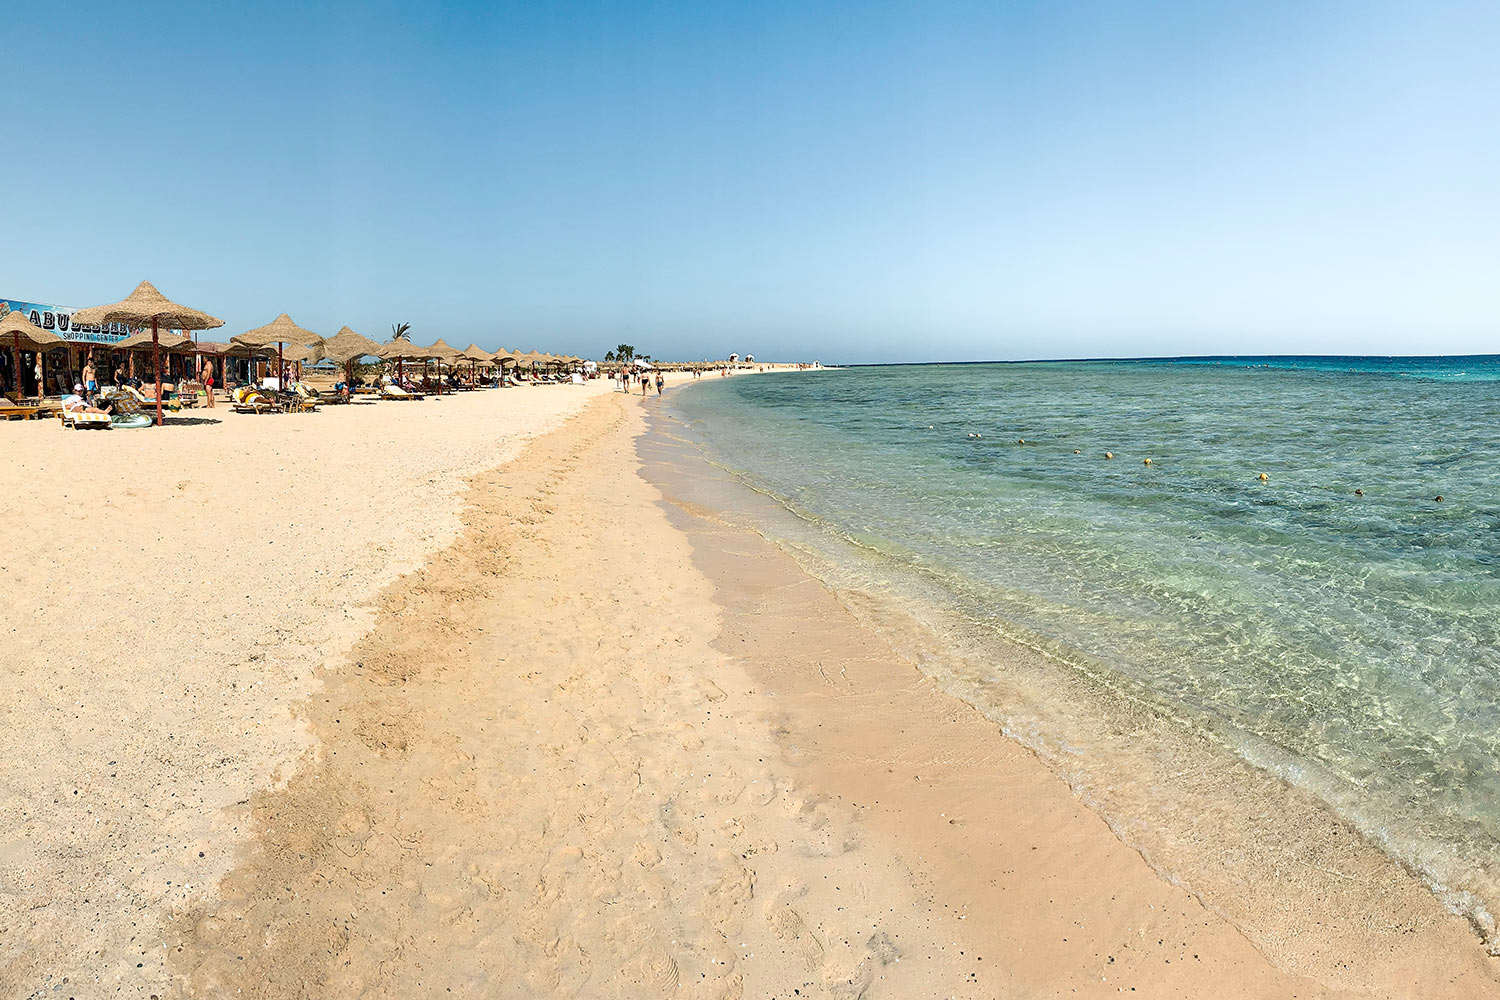 Plage, Abu Dabab, Mer Rouge, Égypte / Beach, Abu Dabab, Red Sea, Egypt